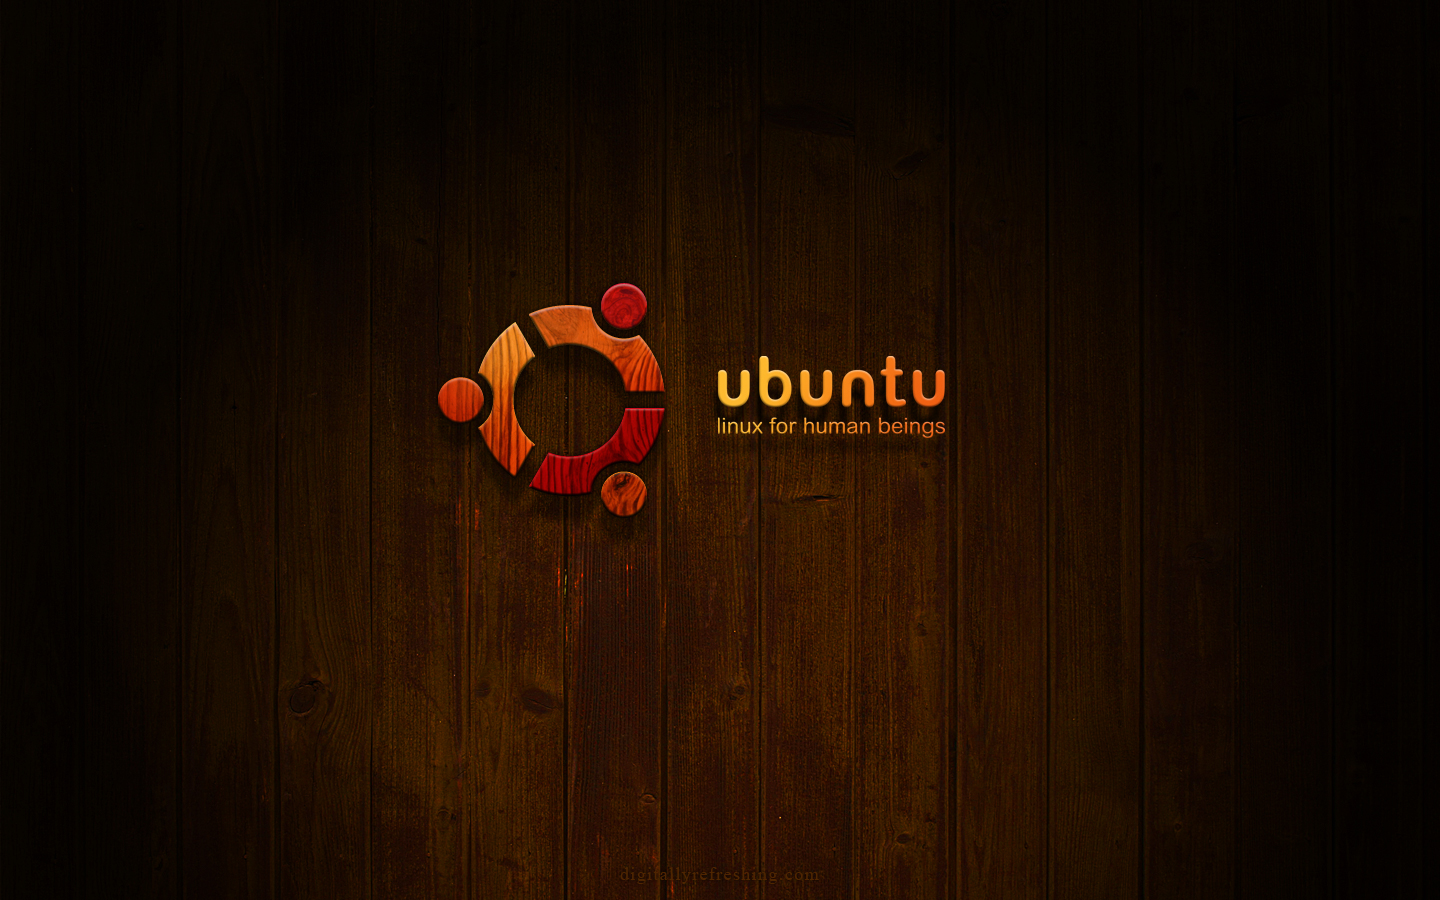 Unbuntu Wallpaper On